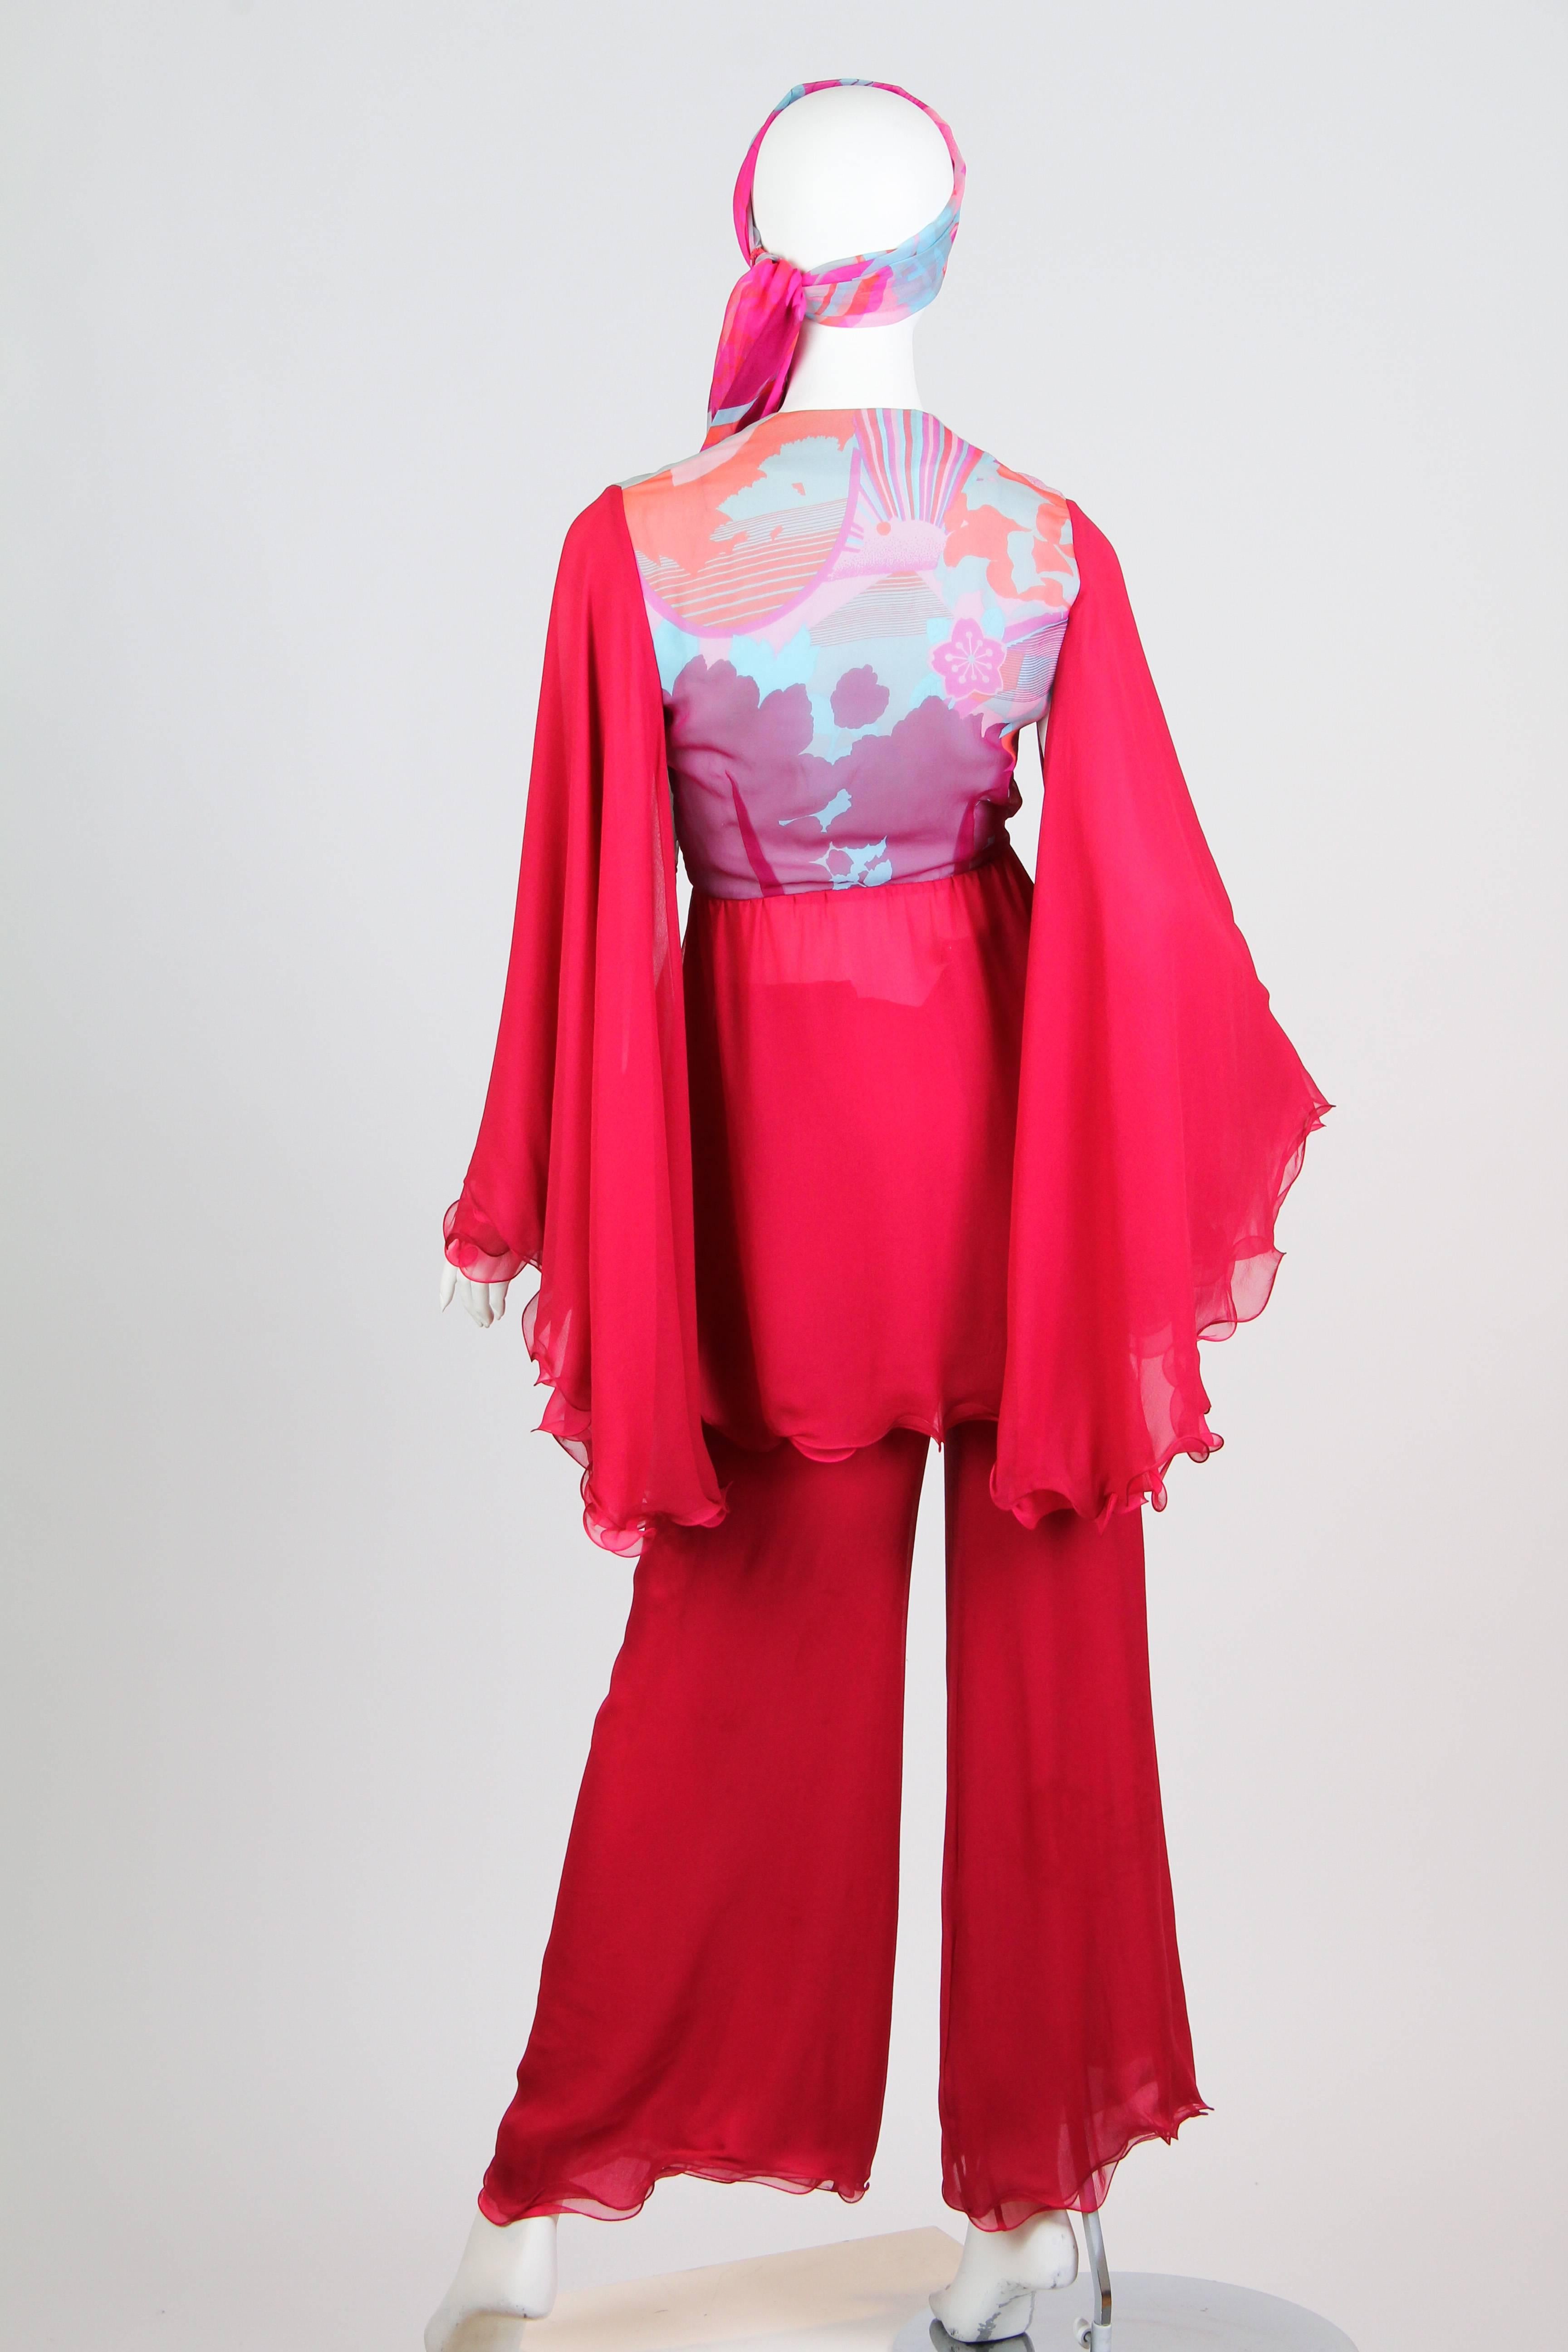 HANAE MORI Haute Couture Ensemble aus Seidenchiffonbluse, Schal und Hose, 1970er Jahre (Rot) im Angebot